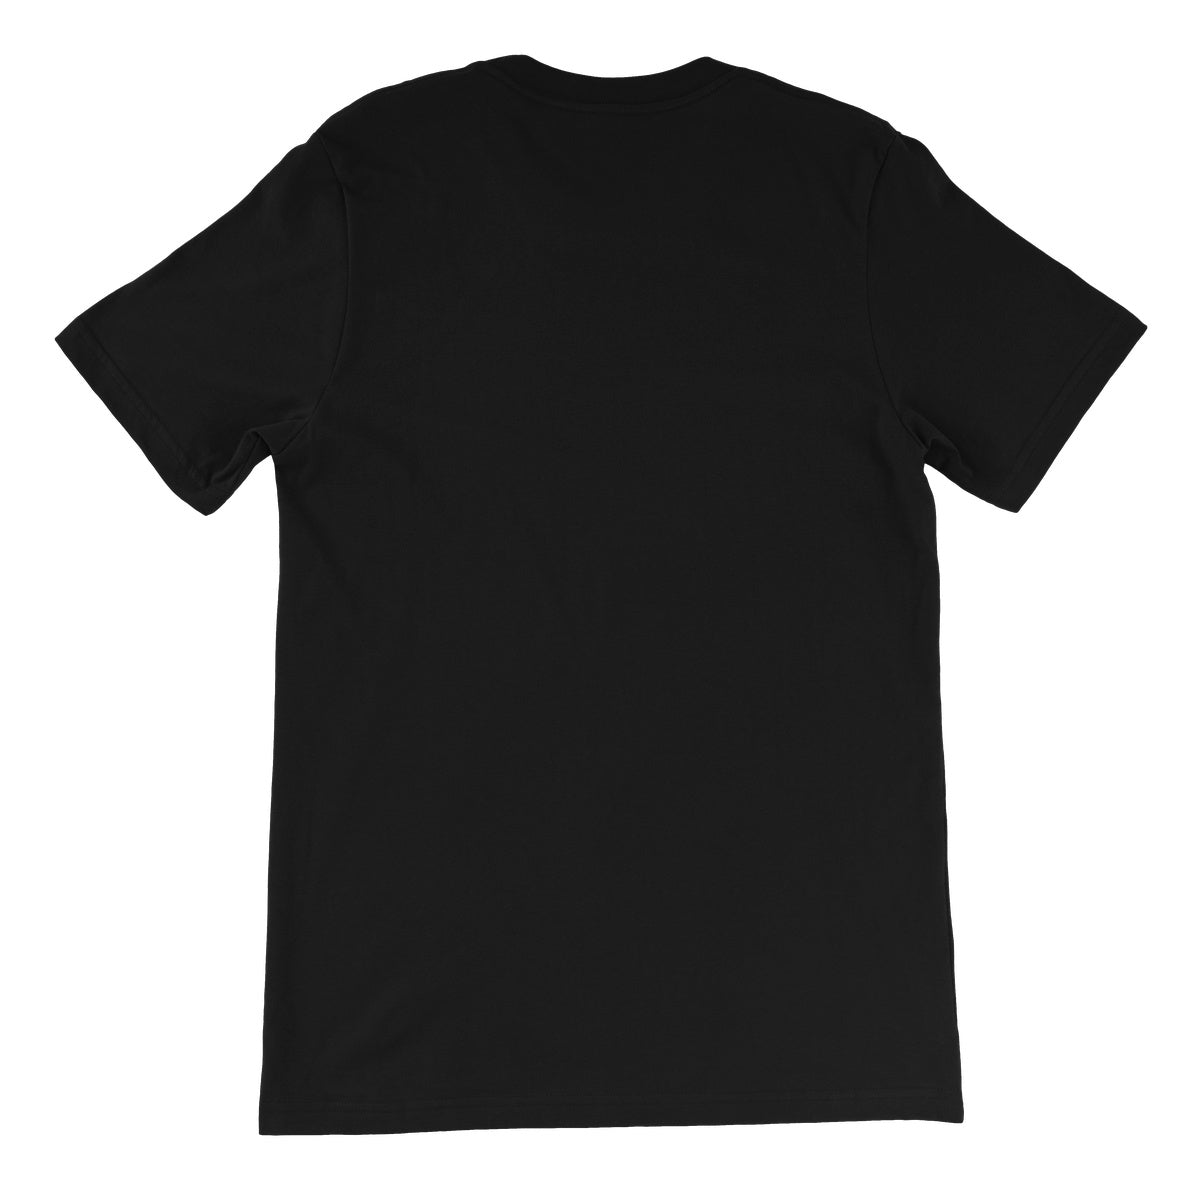 TNT Extreme Wrestling Project X Unisex Short Sleeve T-Shirt